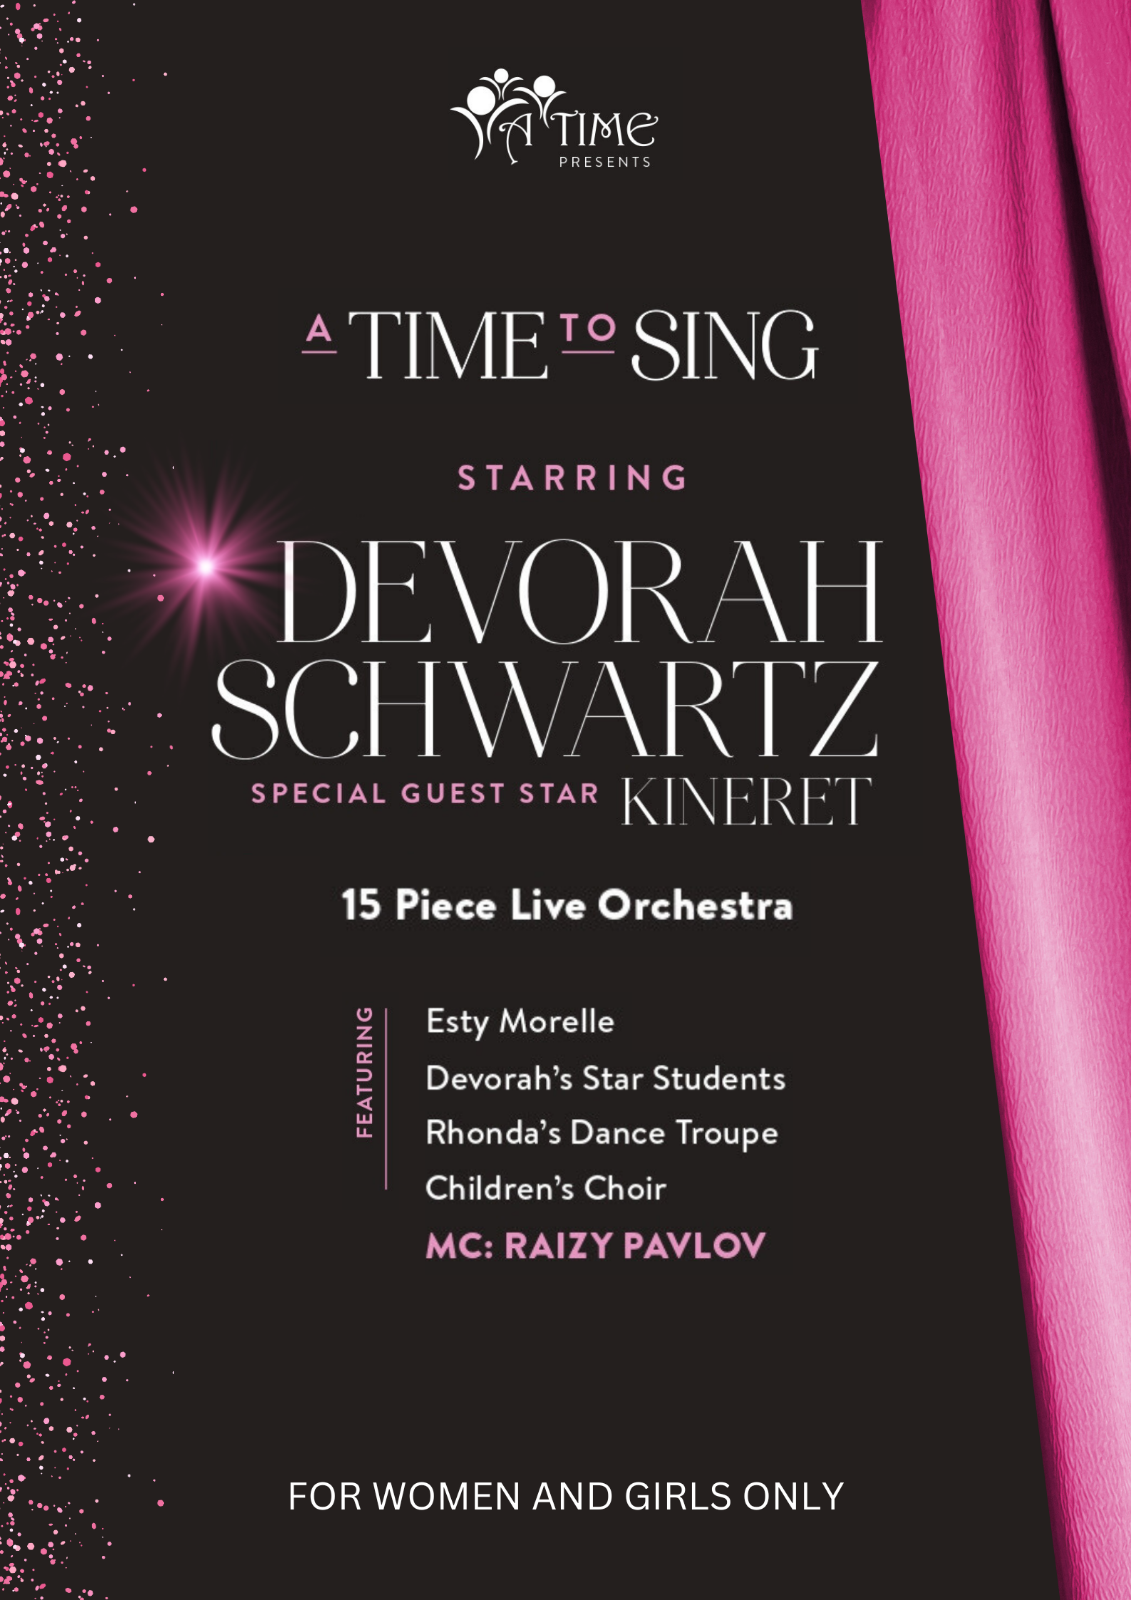 Devorah Schwartz - A Time To Sing (Video)